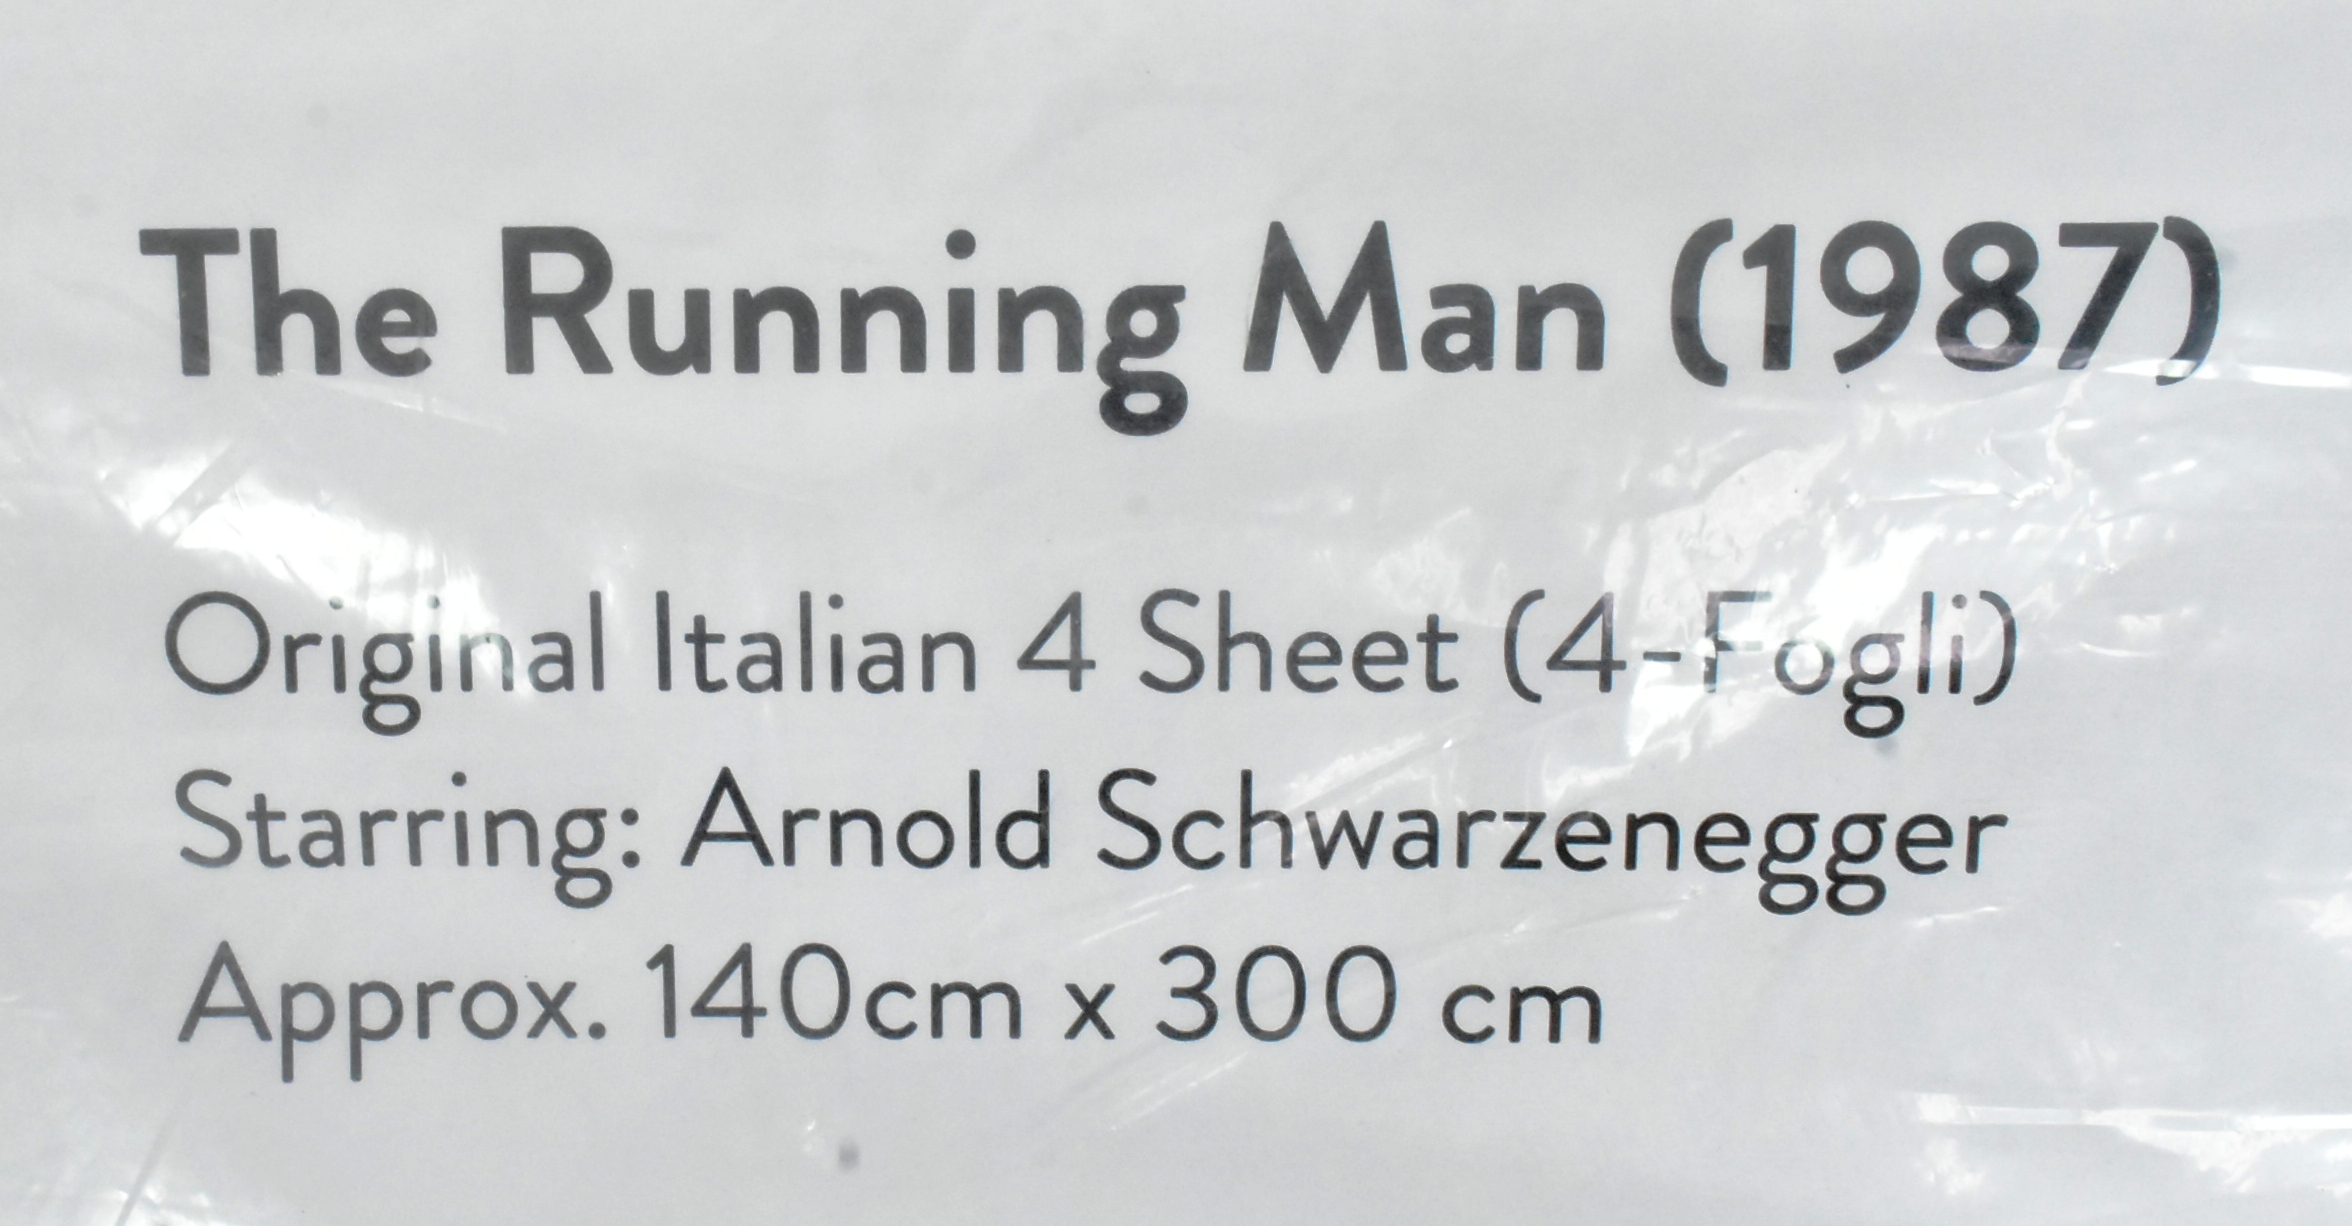 THE RUNNING MAN (1987) - ORIGINAL LARGE ITALIAN 4 SHEET POSTER - Image 2 of 2